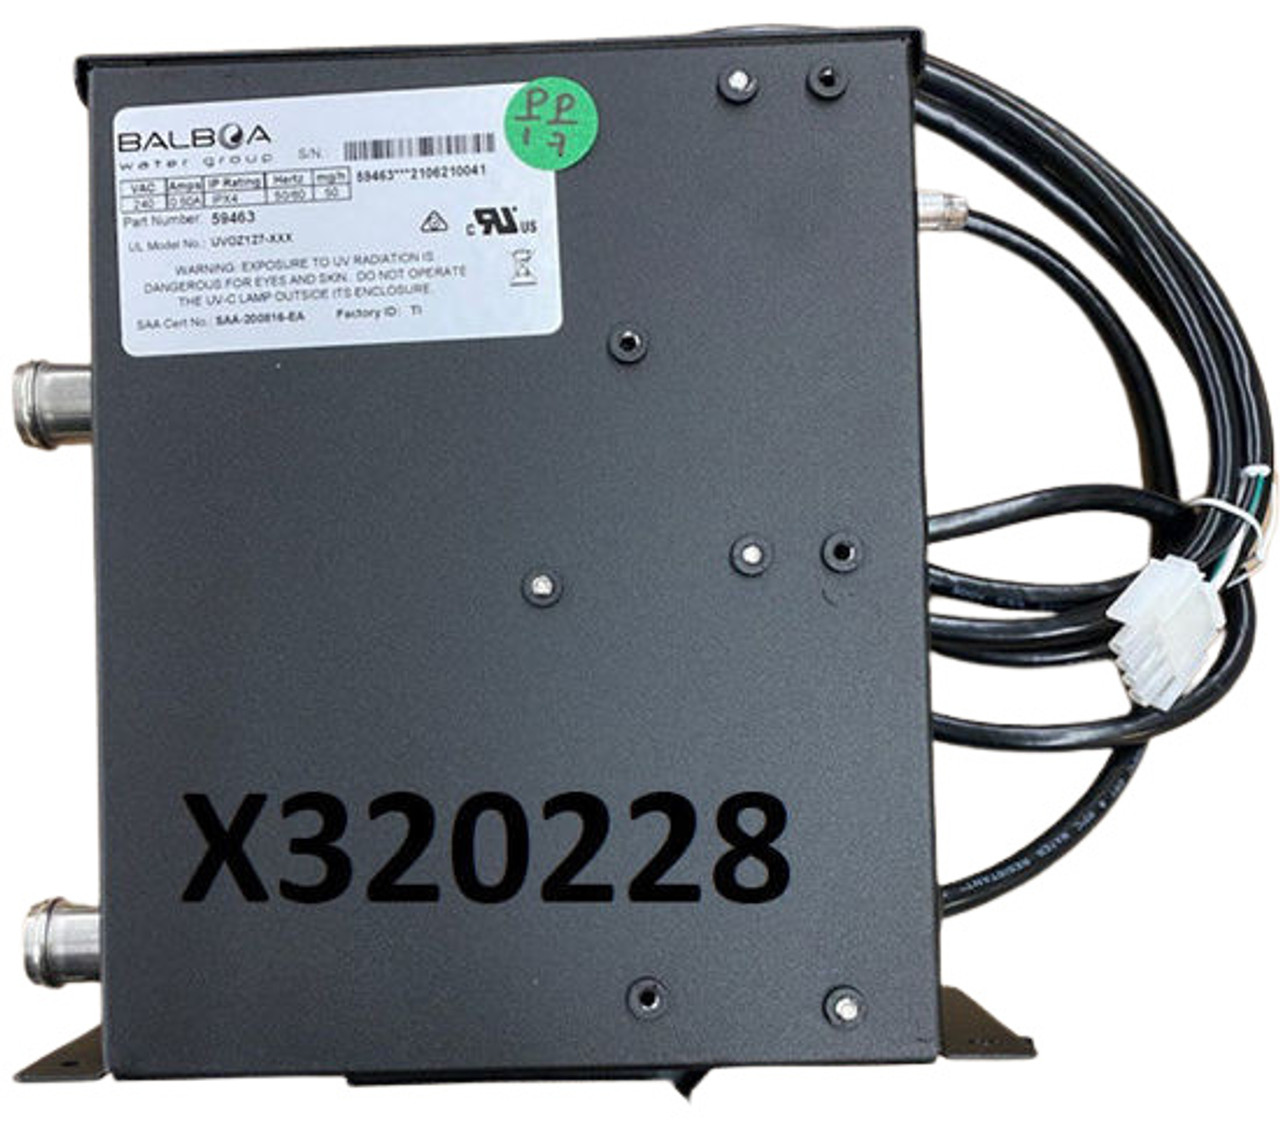 X320228- Master Spa-OZONE, WAVEZONE 50MG7W UV/